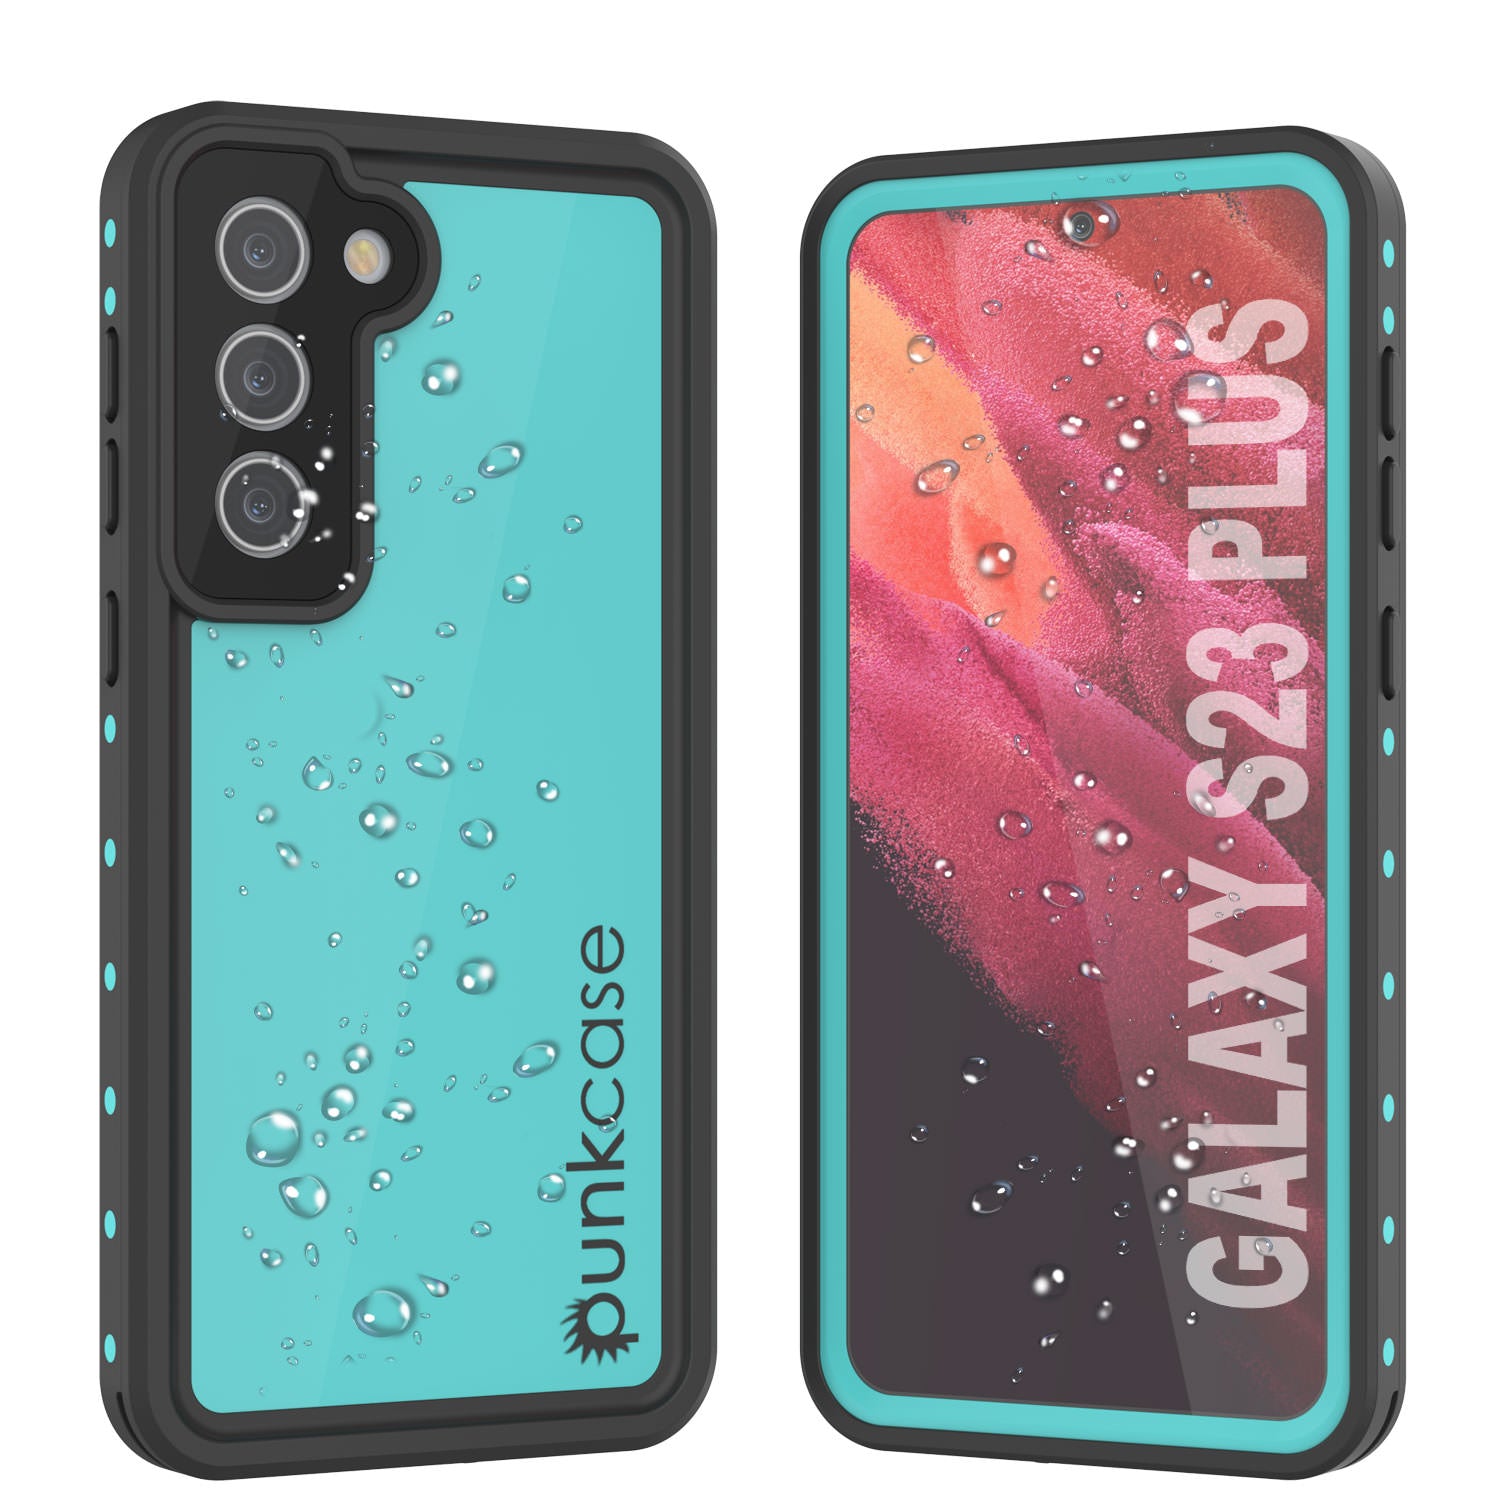 Galaxy S23+ Plus Waterproof Case PunkCase StudStar Teal Thin 6.6ft Underwater IP68 Shock/Snow Proof